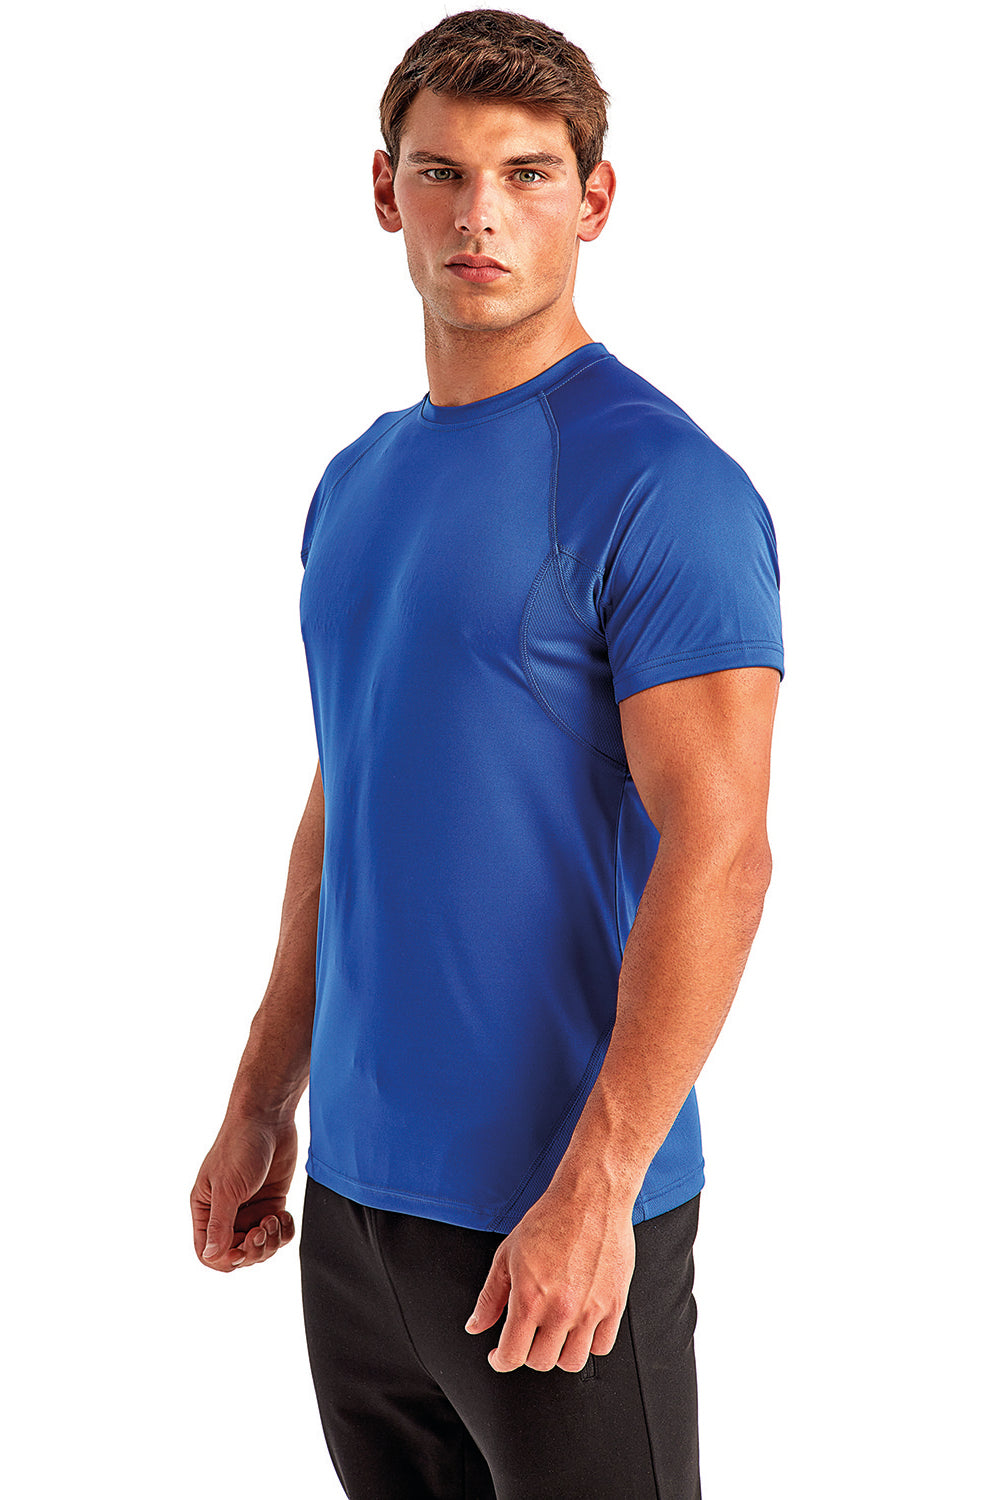 TriDri TD011 Mens Panelled Tech Moisture Wicking Short Sleeve Crewneck T-Shirt Royal Blue 3Q